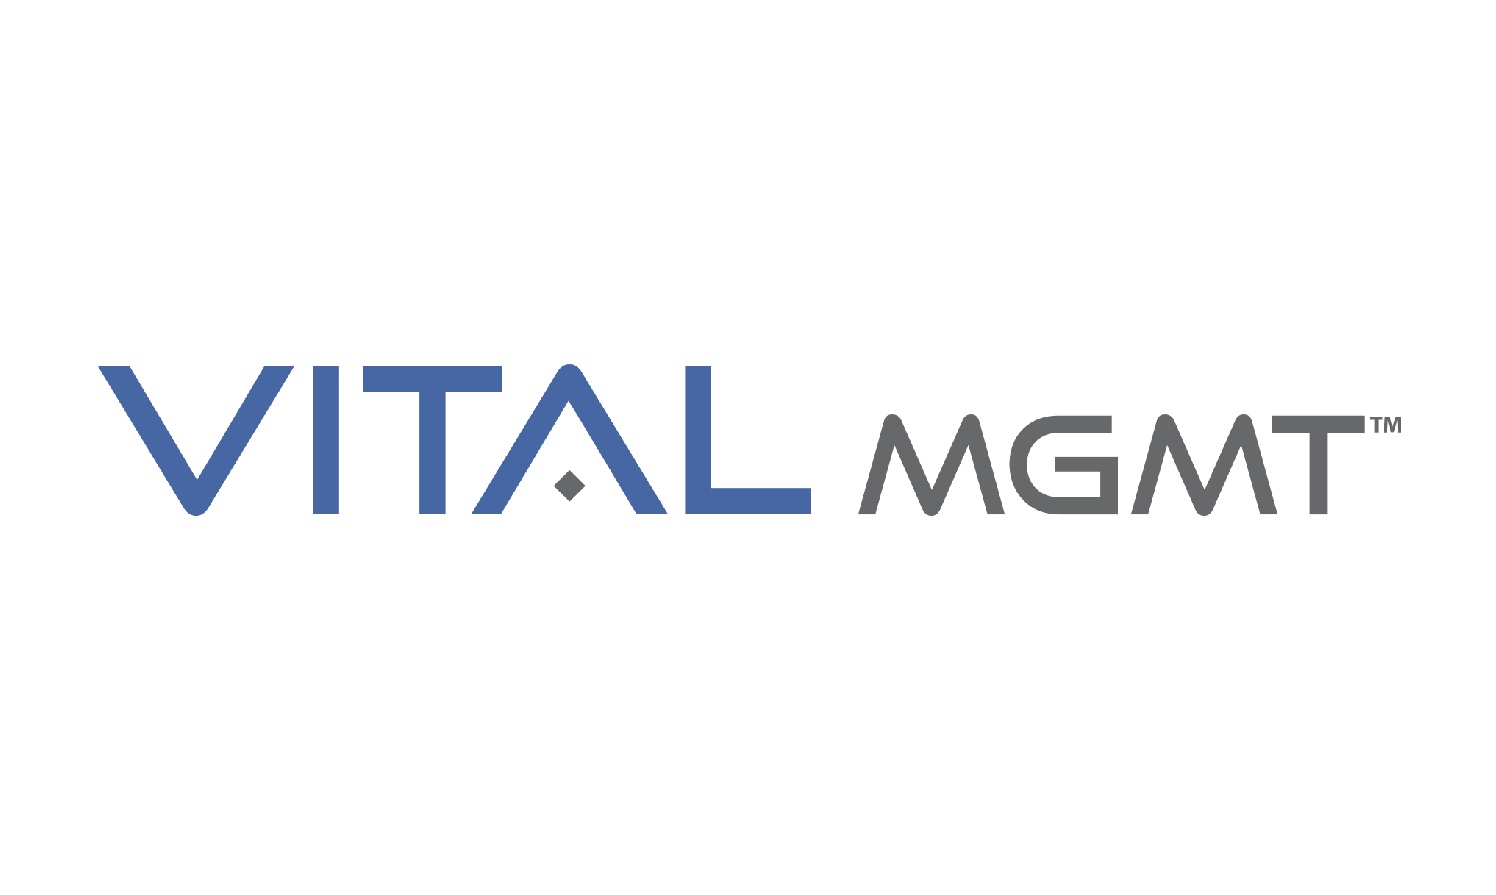 Vital Mgmt sponsor logo